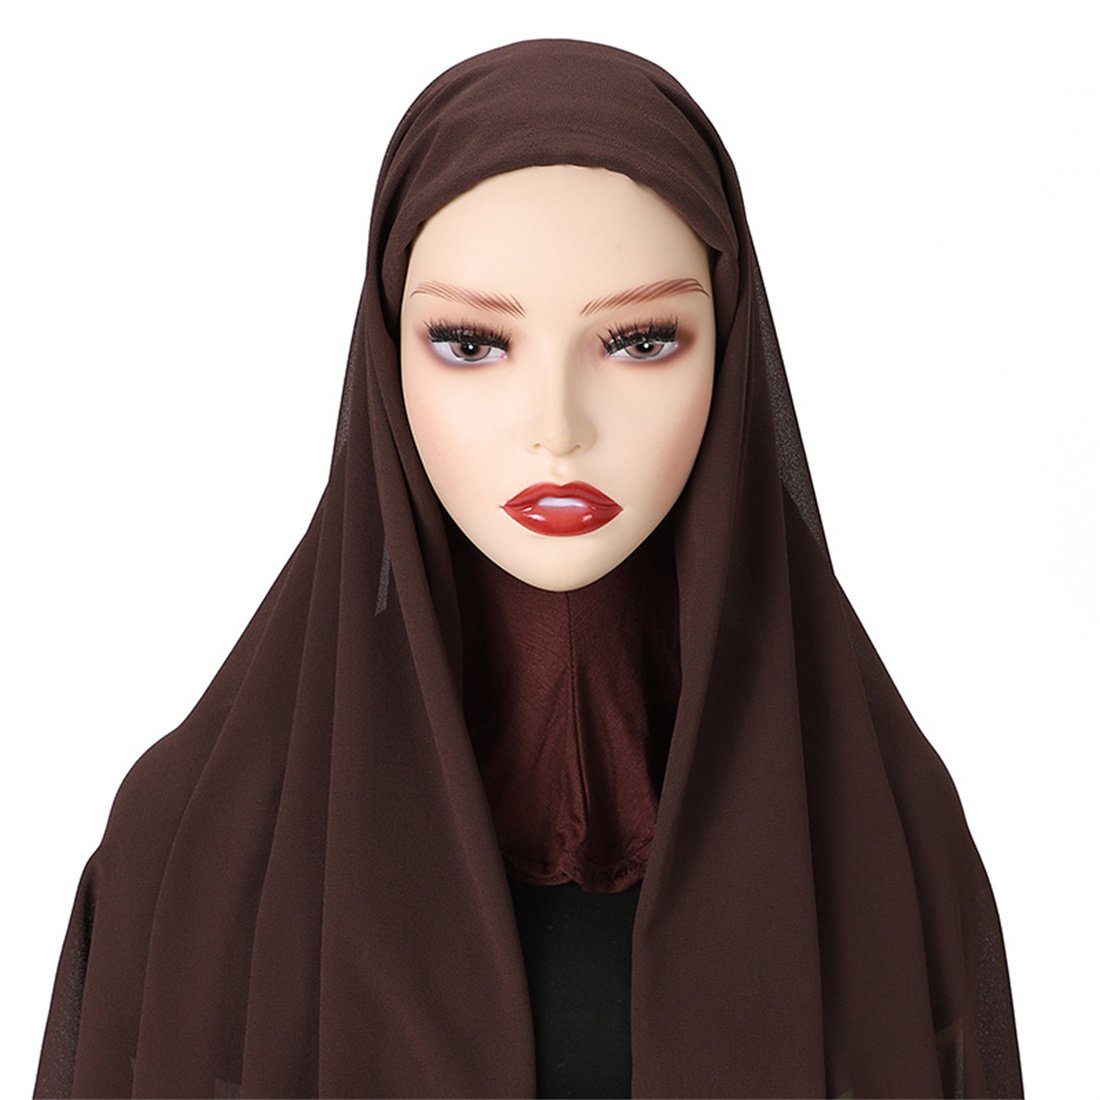 Frauenkopfbedeckung Grau Sarong, DÖRÖY Sarong, Seidenschal Kopfbedeckung